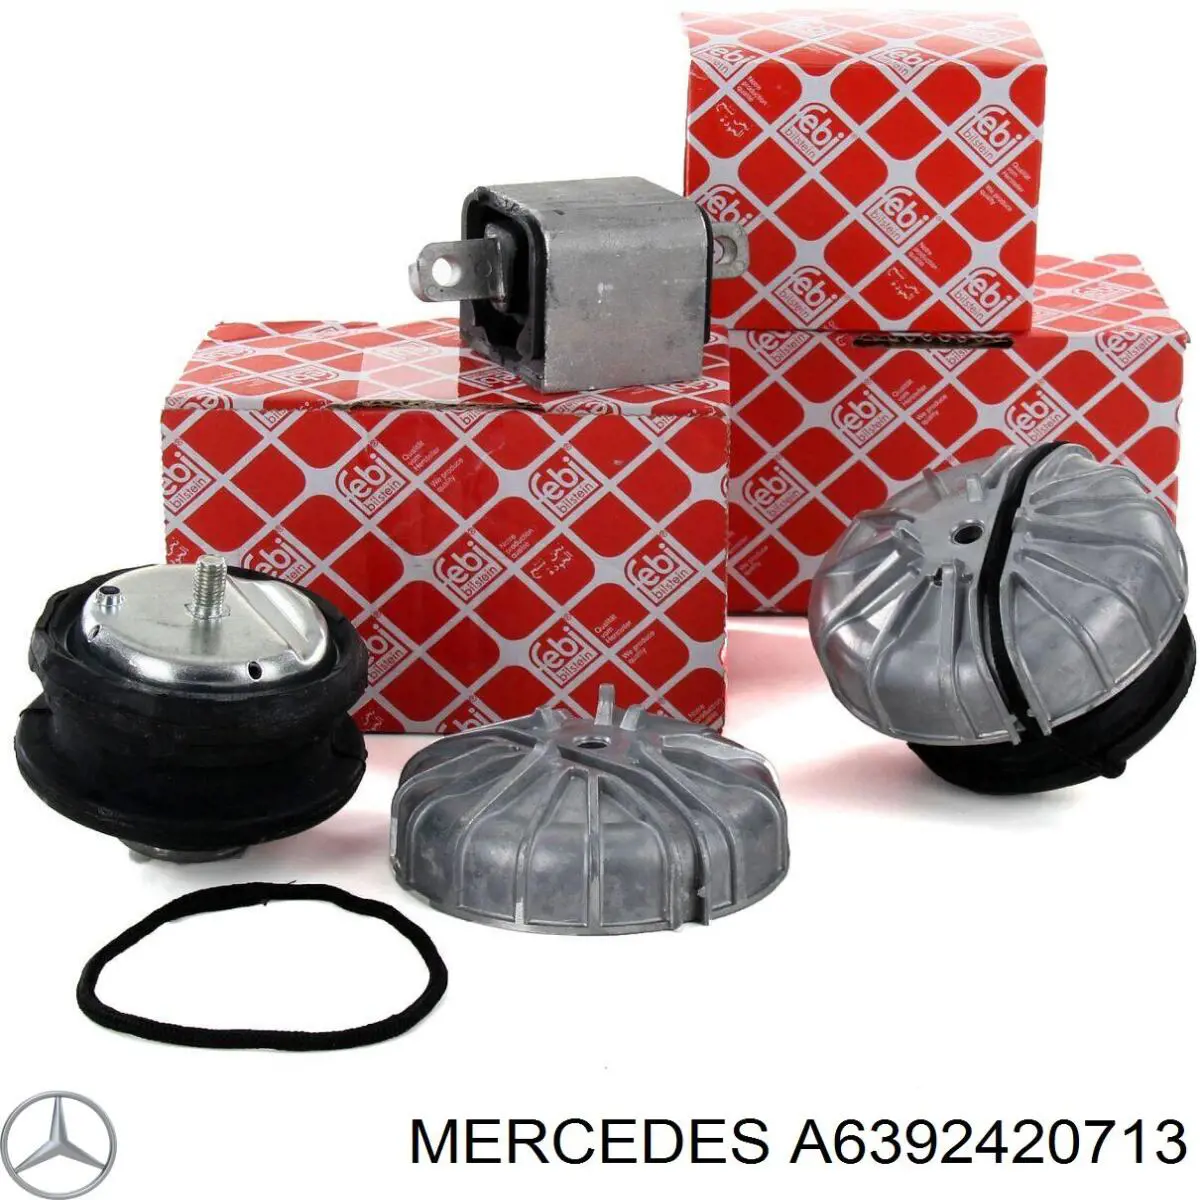 A6392420713 Mercedes montaje de transmision (montaje de caja de cambios)